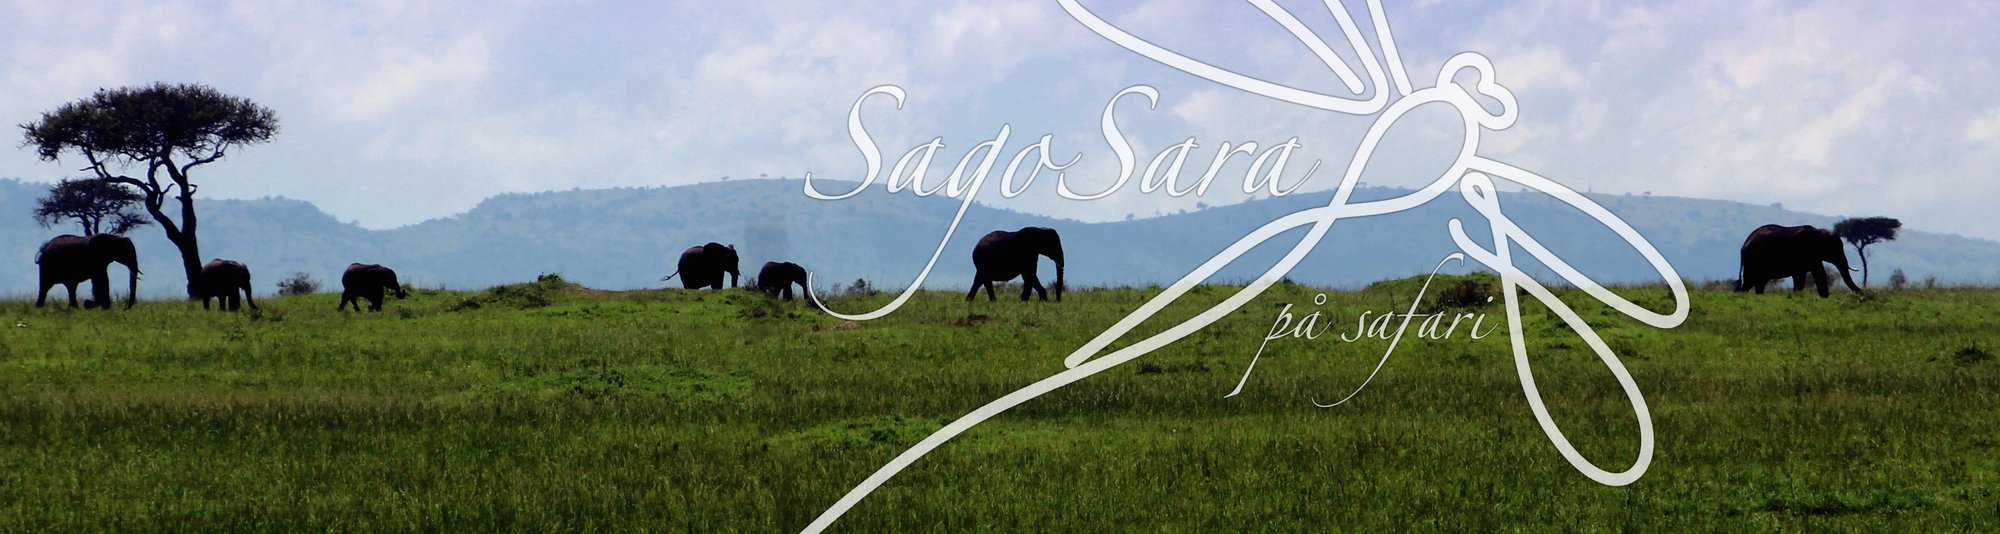 Sago Sara på safari